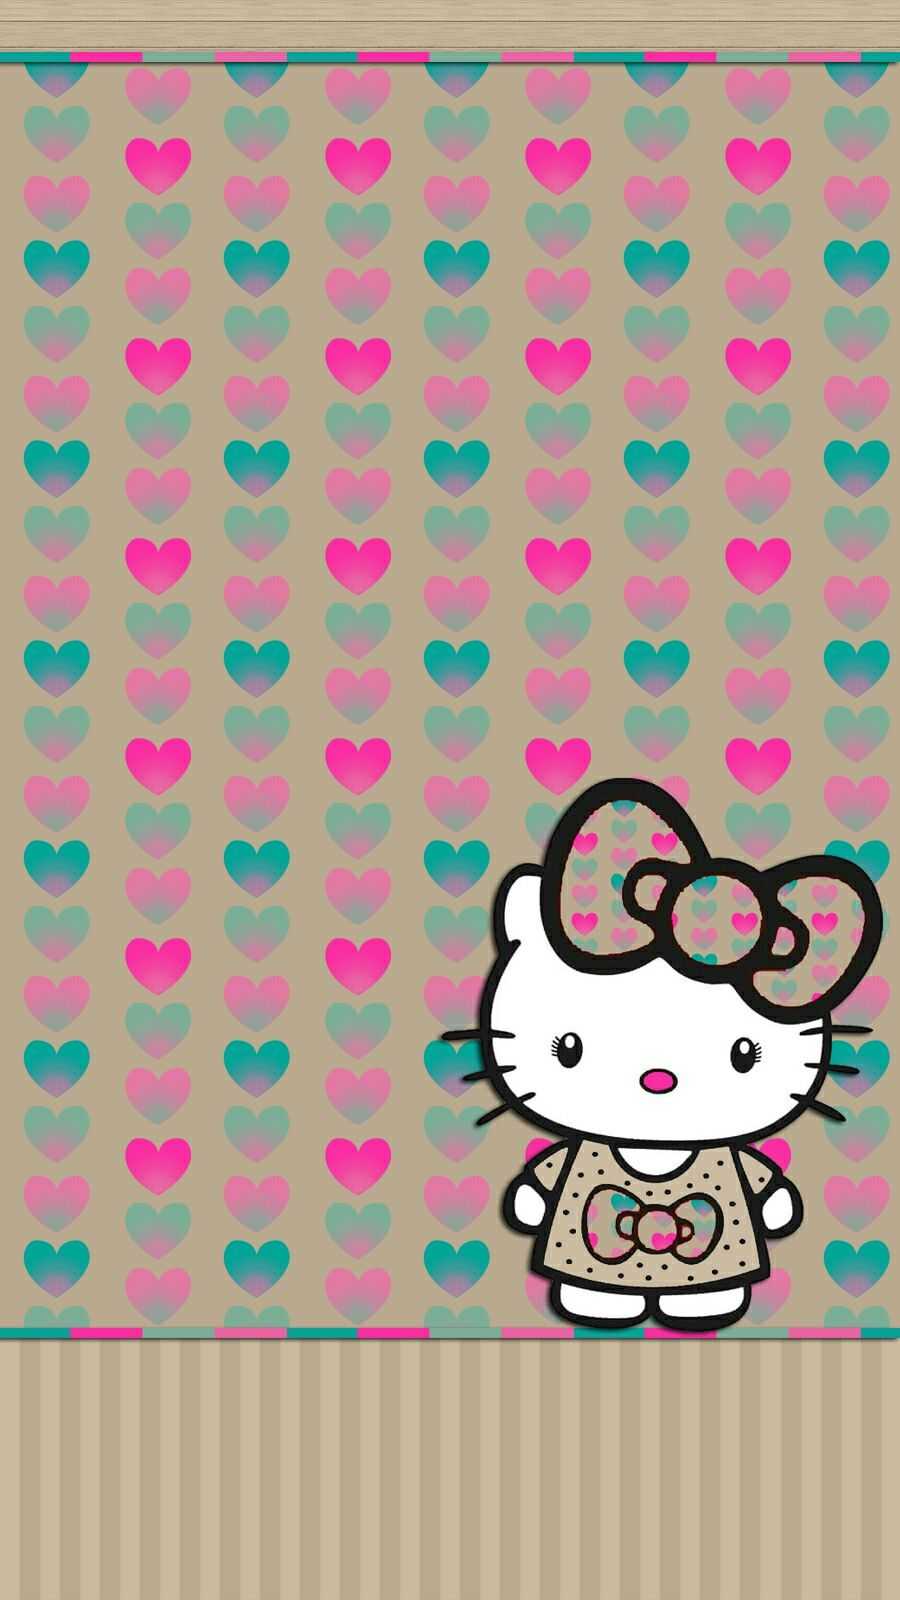 Hello Kitty Neon Light Sign Background 4K Wallpaper iPhone HD